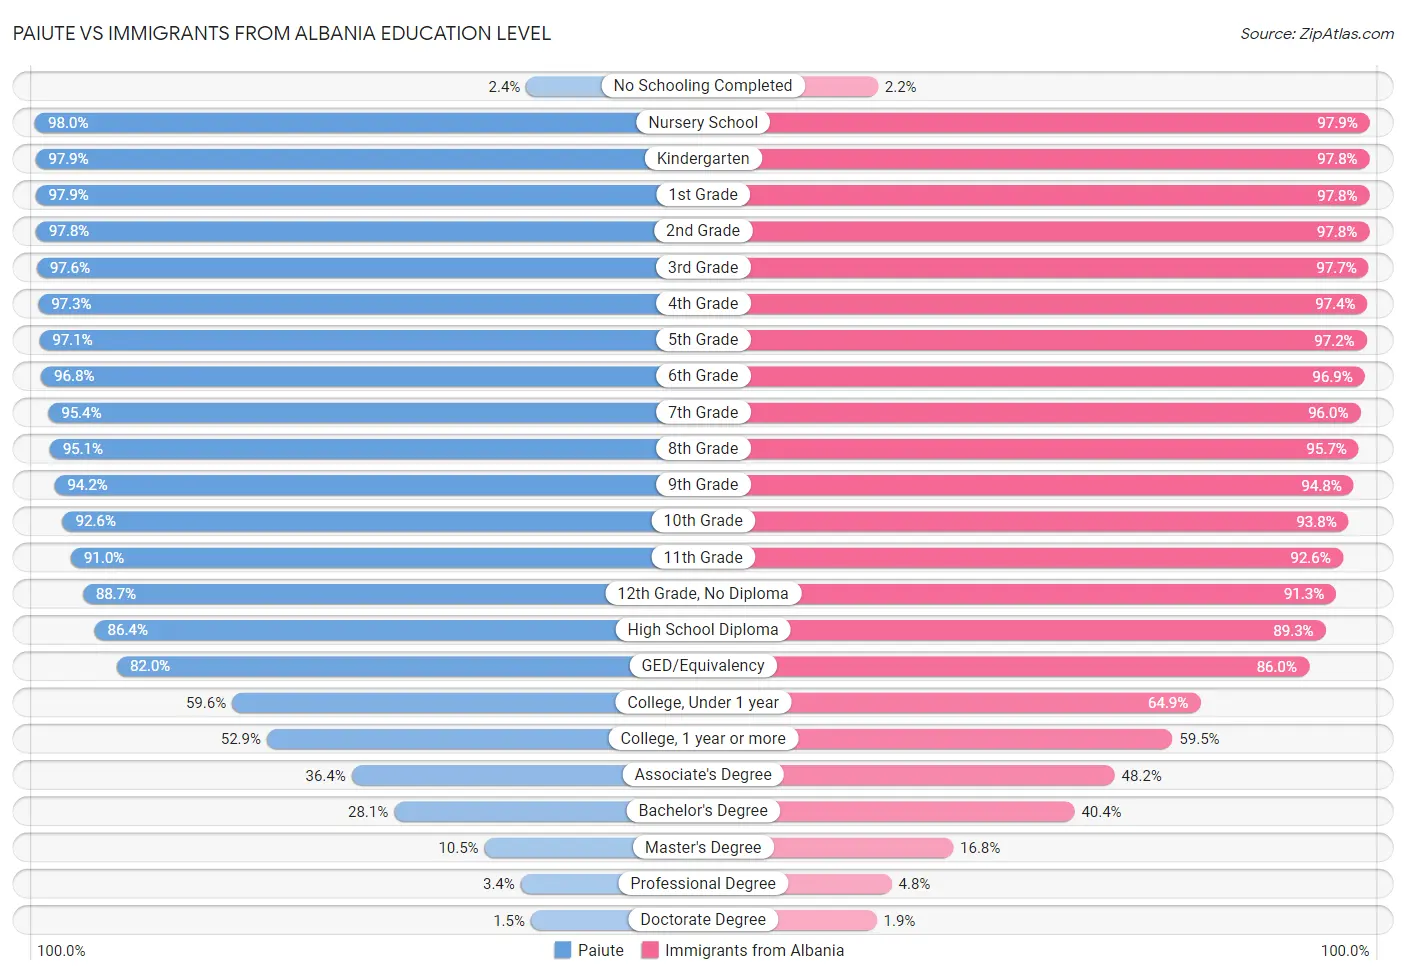 Paiute vs Immigrants from Albania Education Level